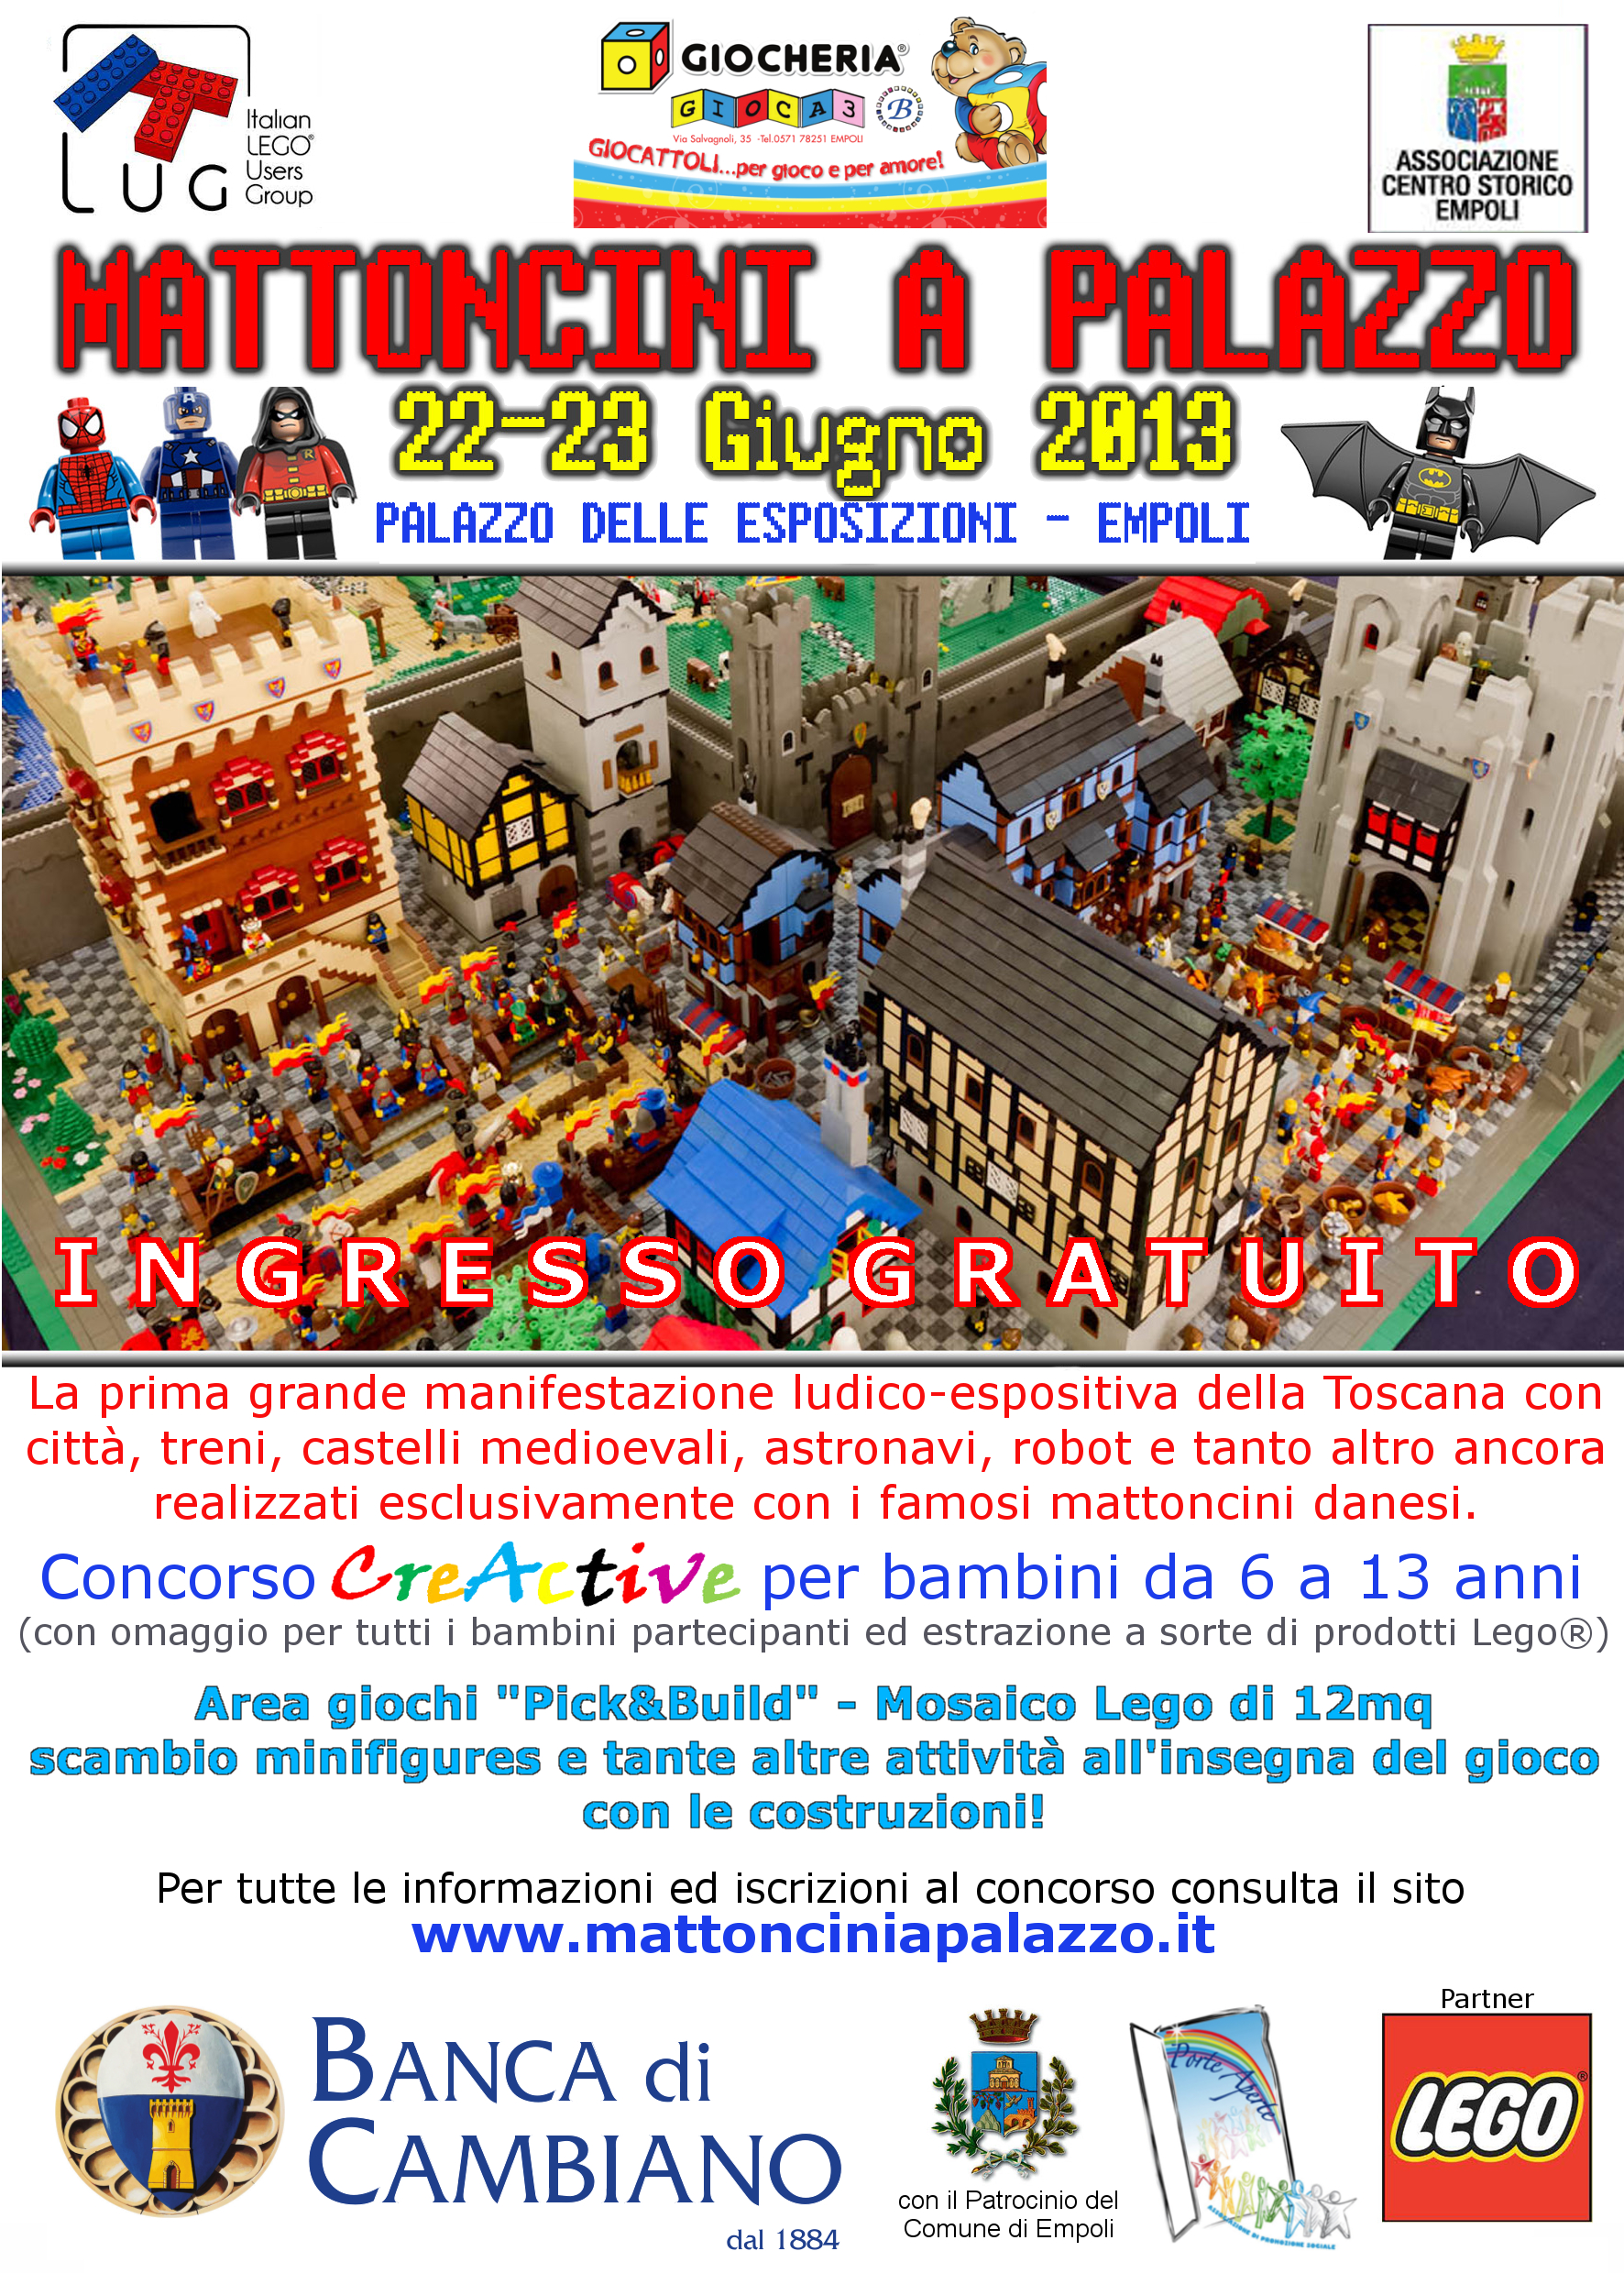 ItLUG Empoli 2013 - Mattoncini a Palazzo